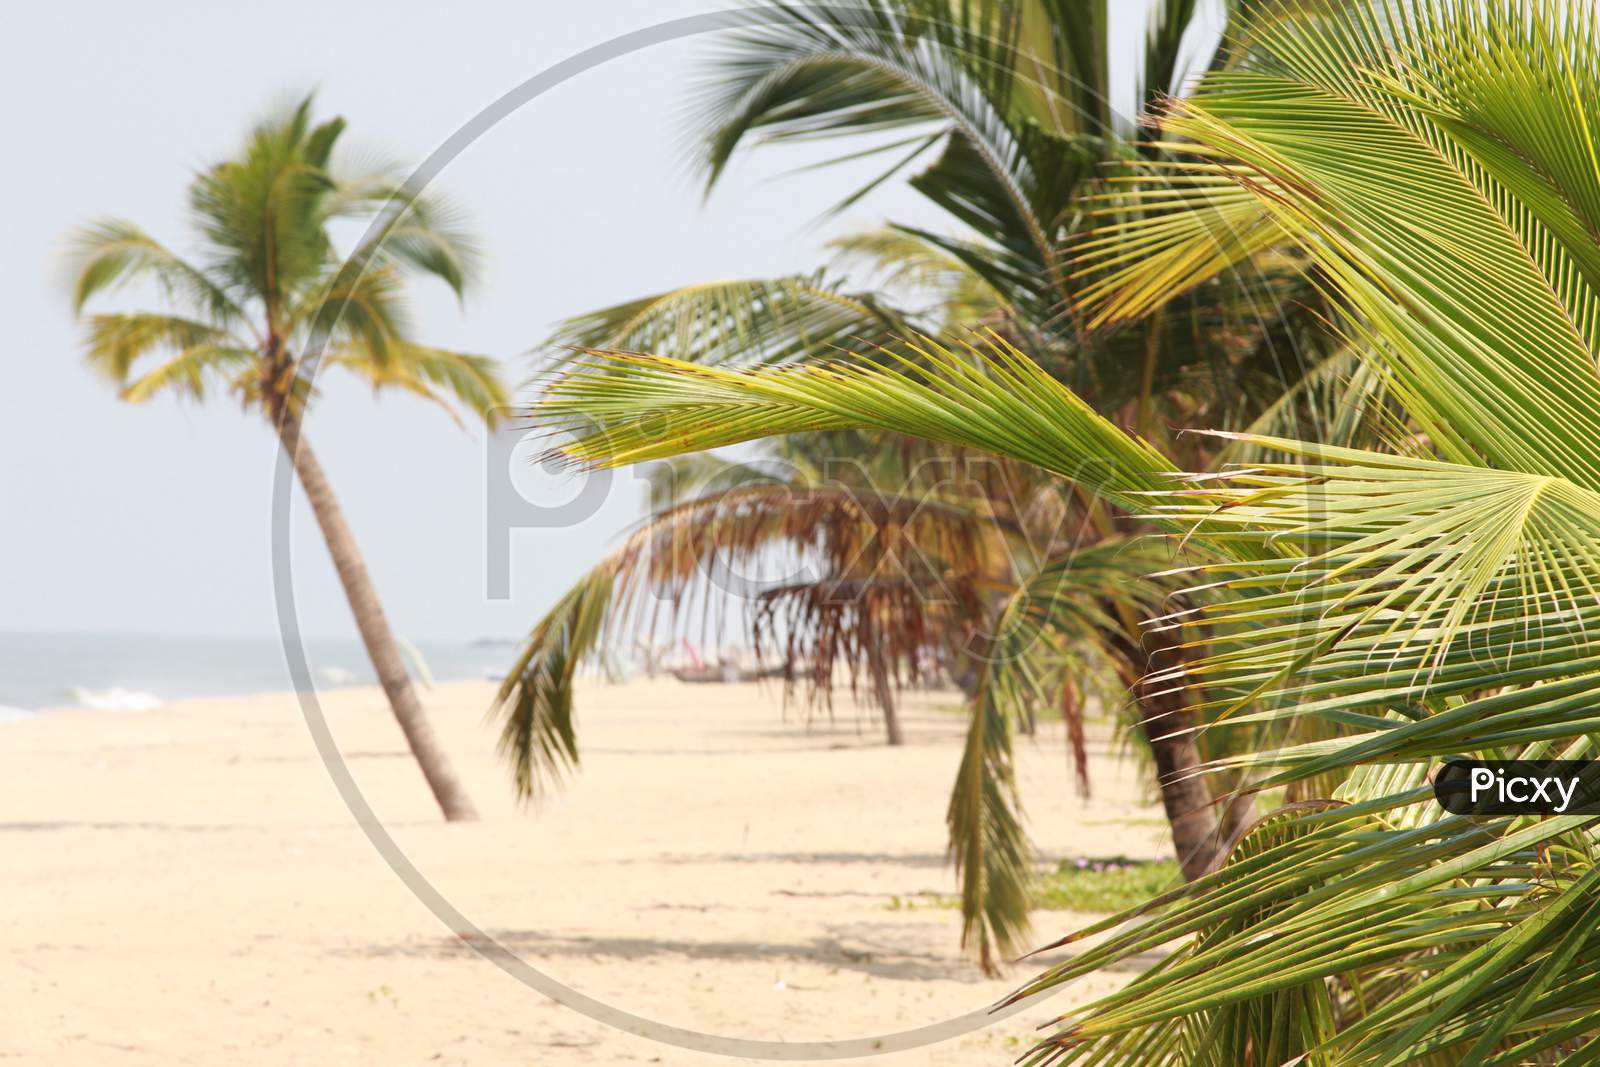 View of Coconut Trees at Marari Beach, Kerala